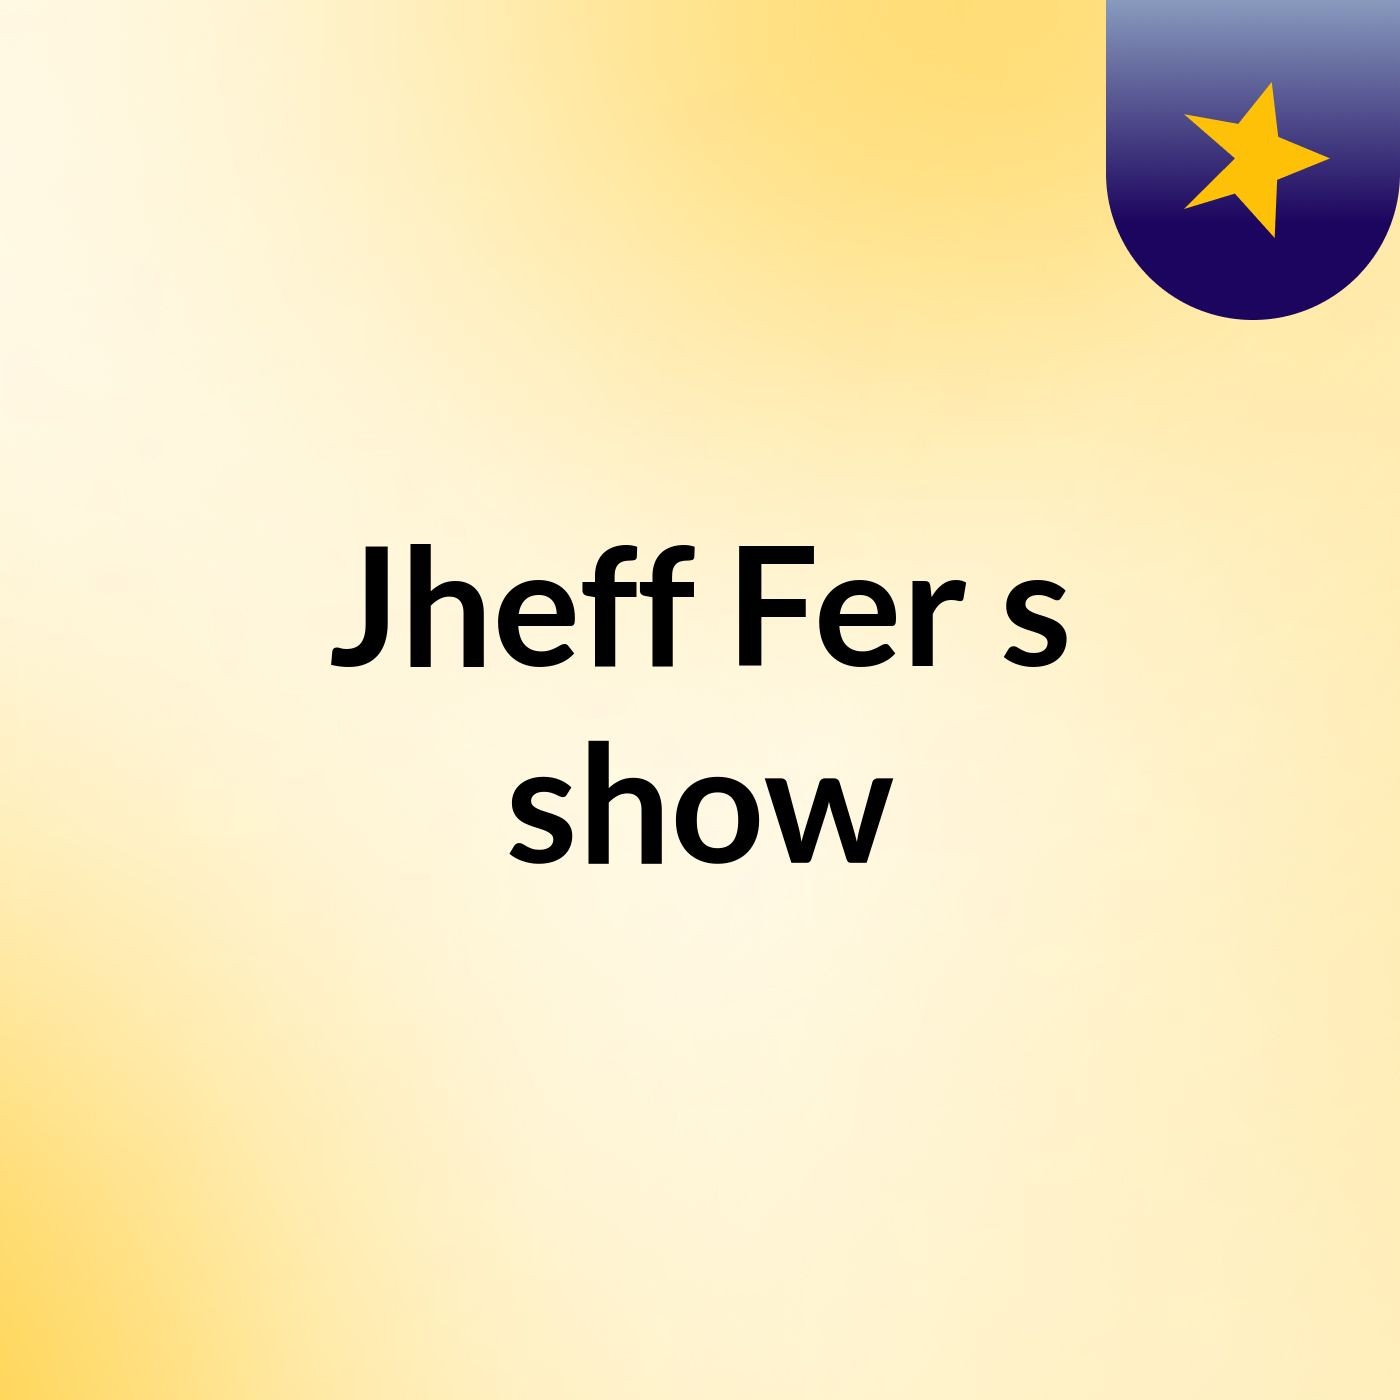 Jheff Fer's show